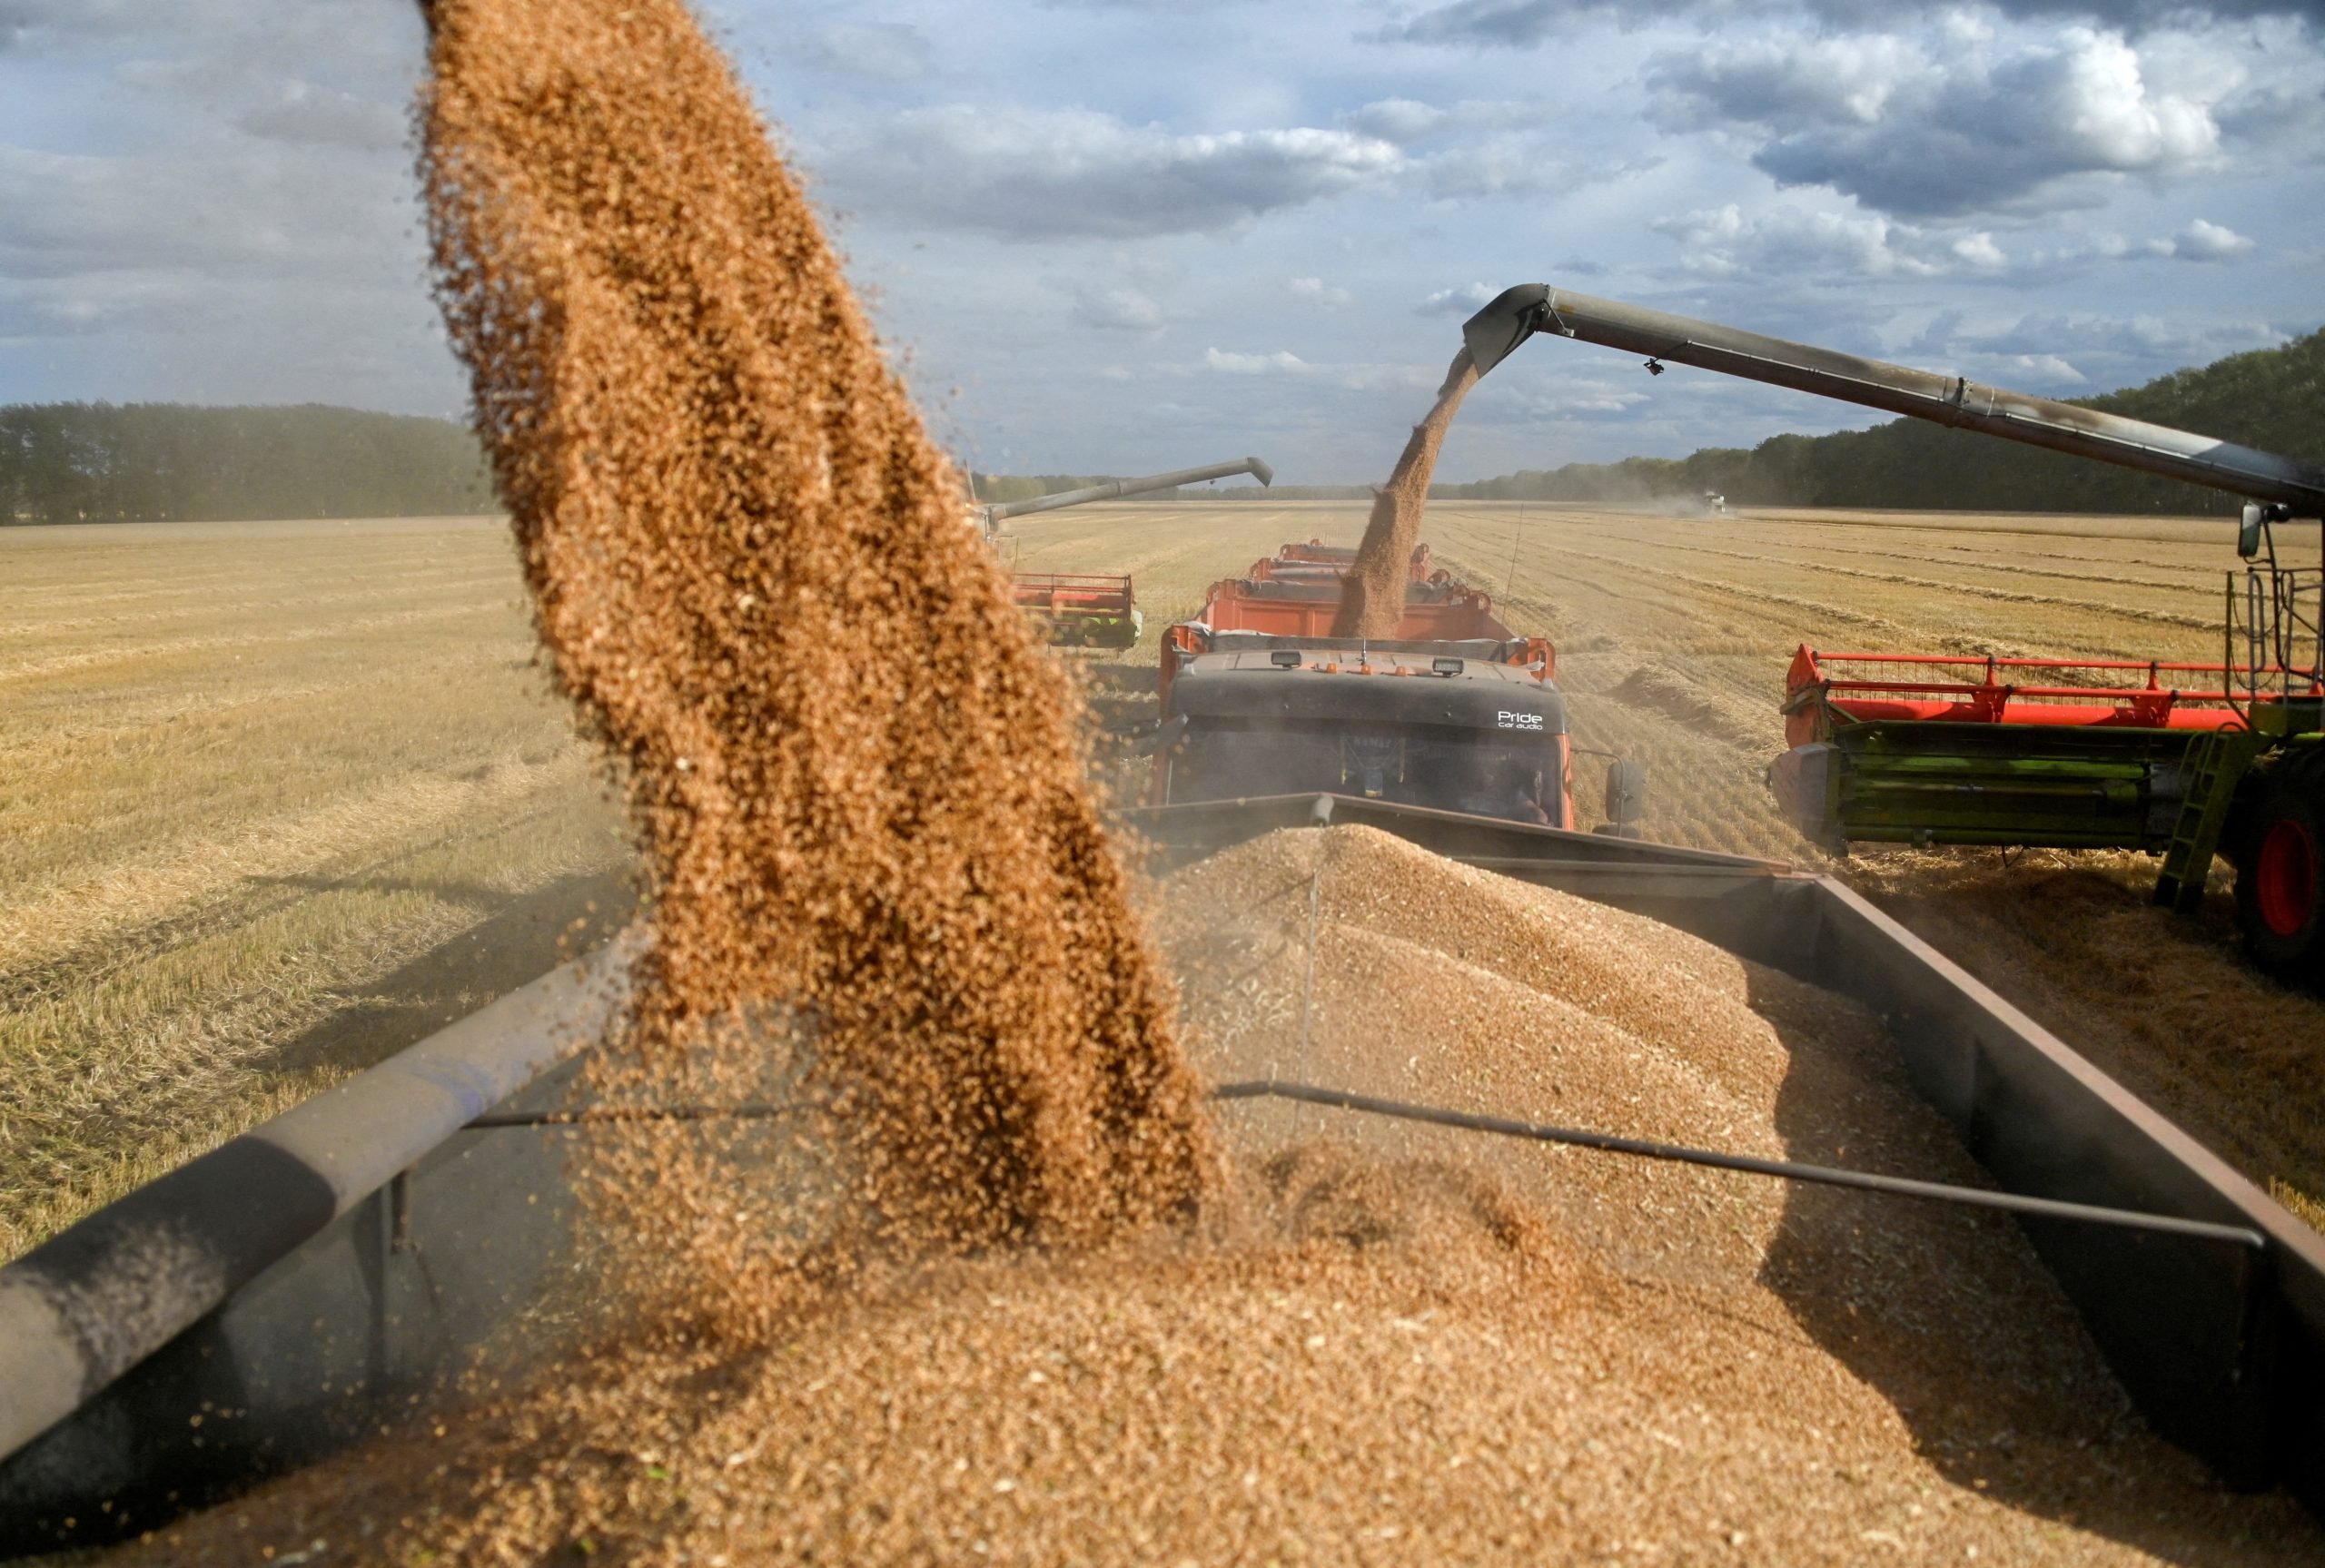 Russia seeks to create new dependencies with cheap grain – EU